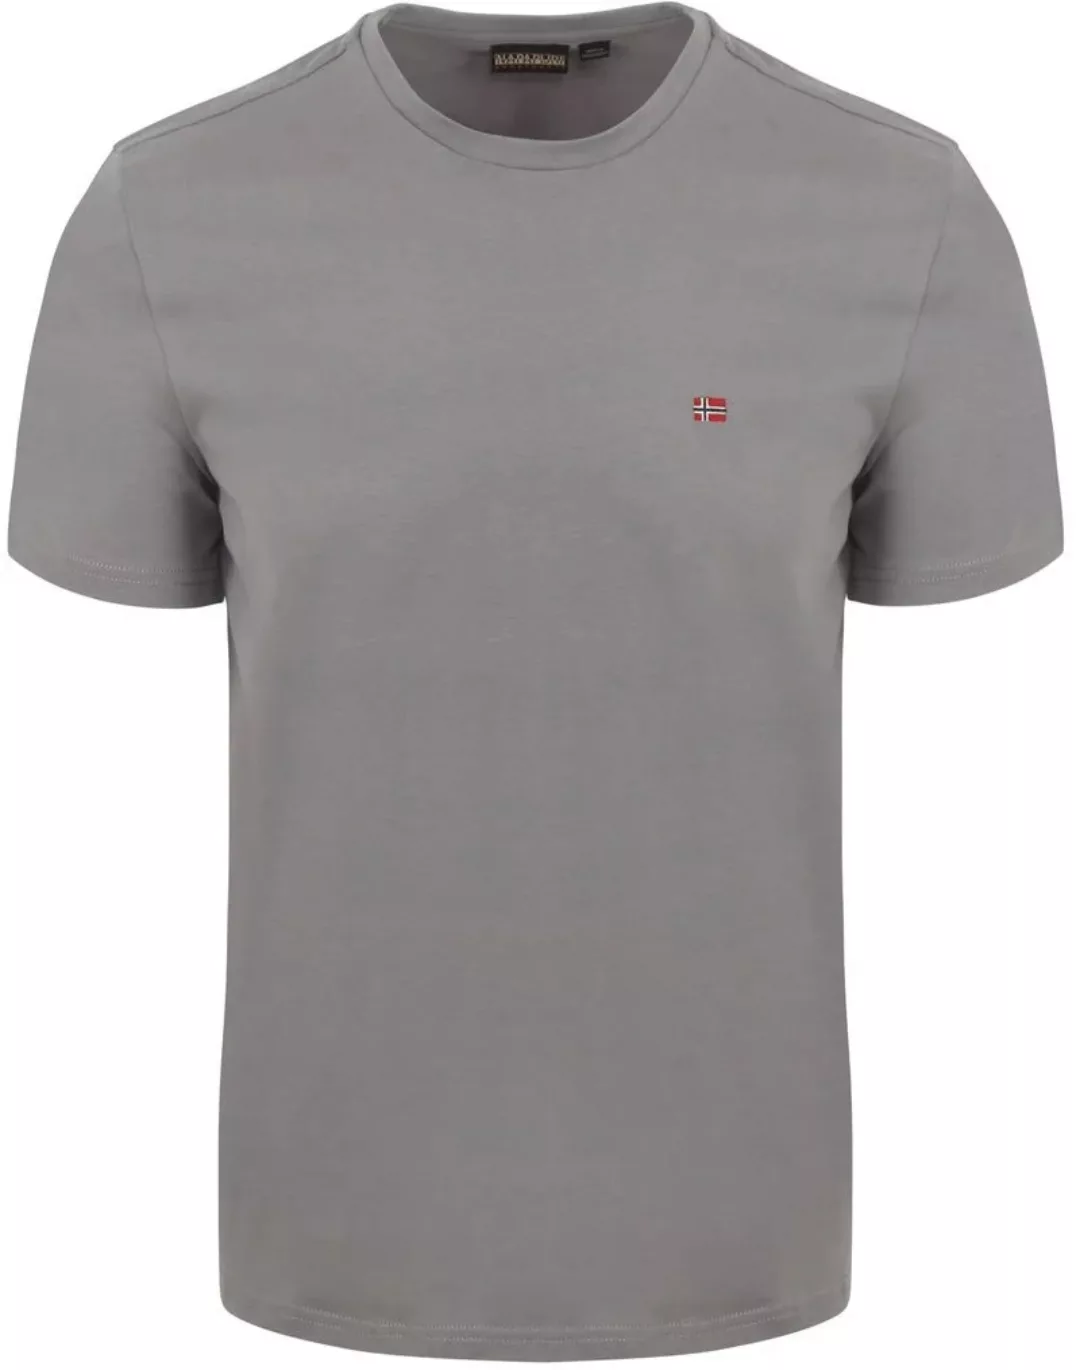 Napapijri Salis T-shirt Mid Grau - Größe 3XL günstig online kaufen